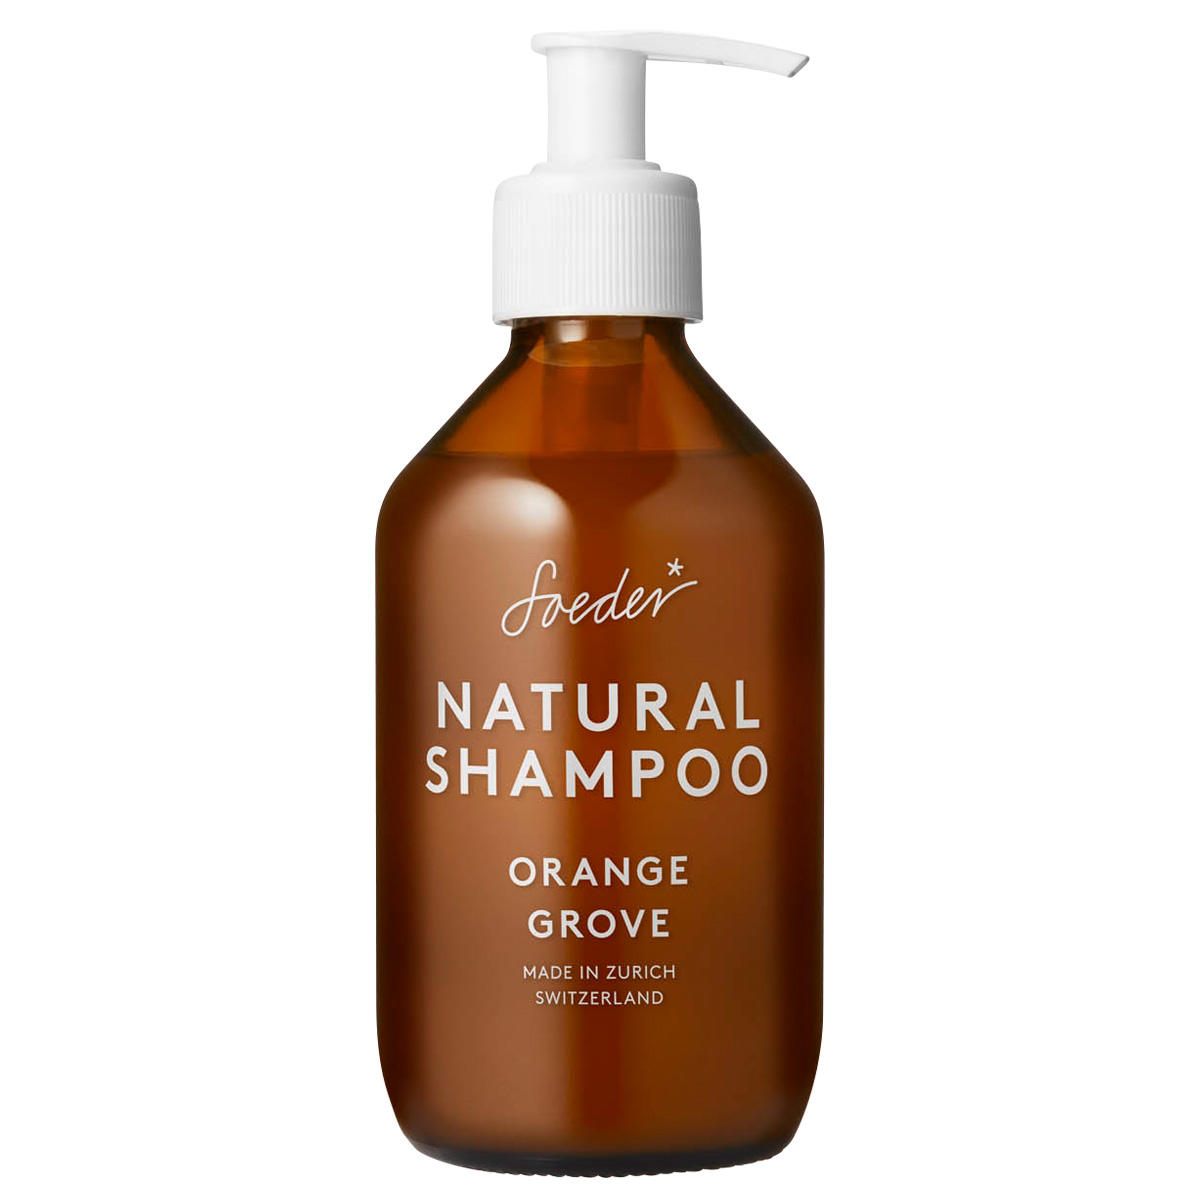 Soeder Natural Shampoo Orange Grove 250 ml